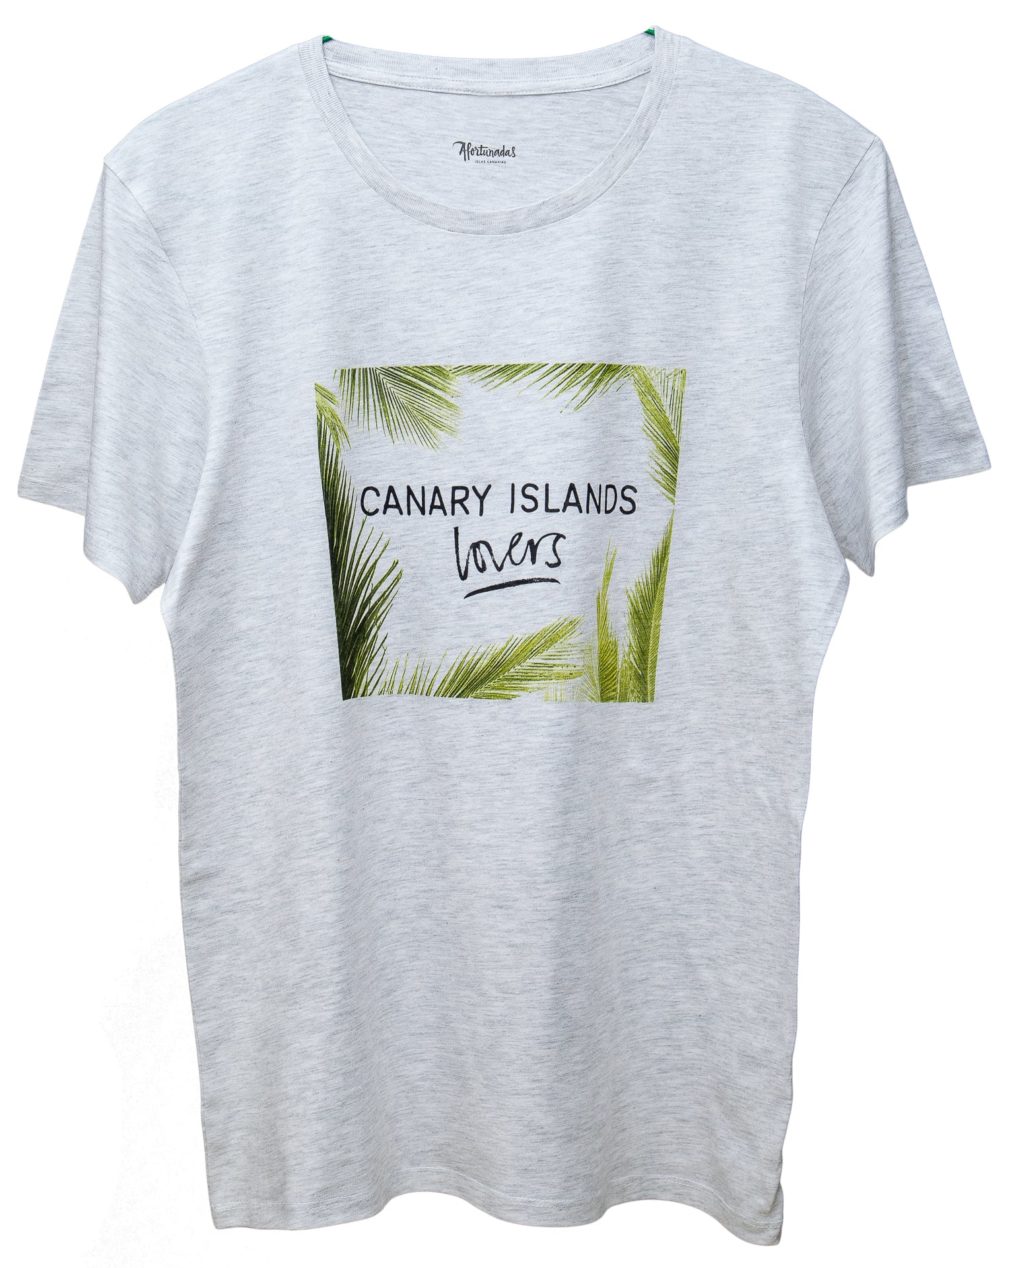 Canary Islands lover hombre camiseta